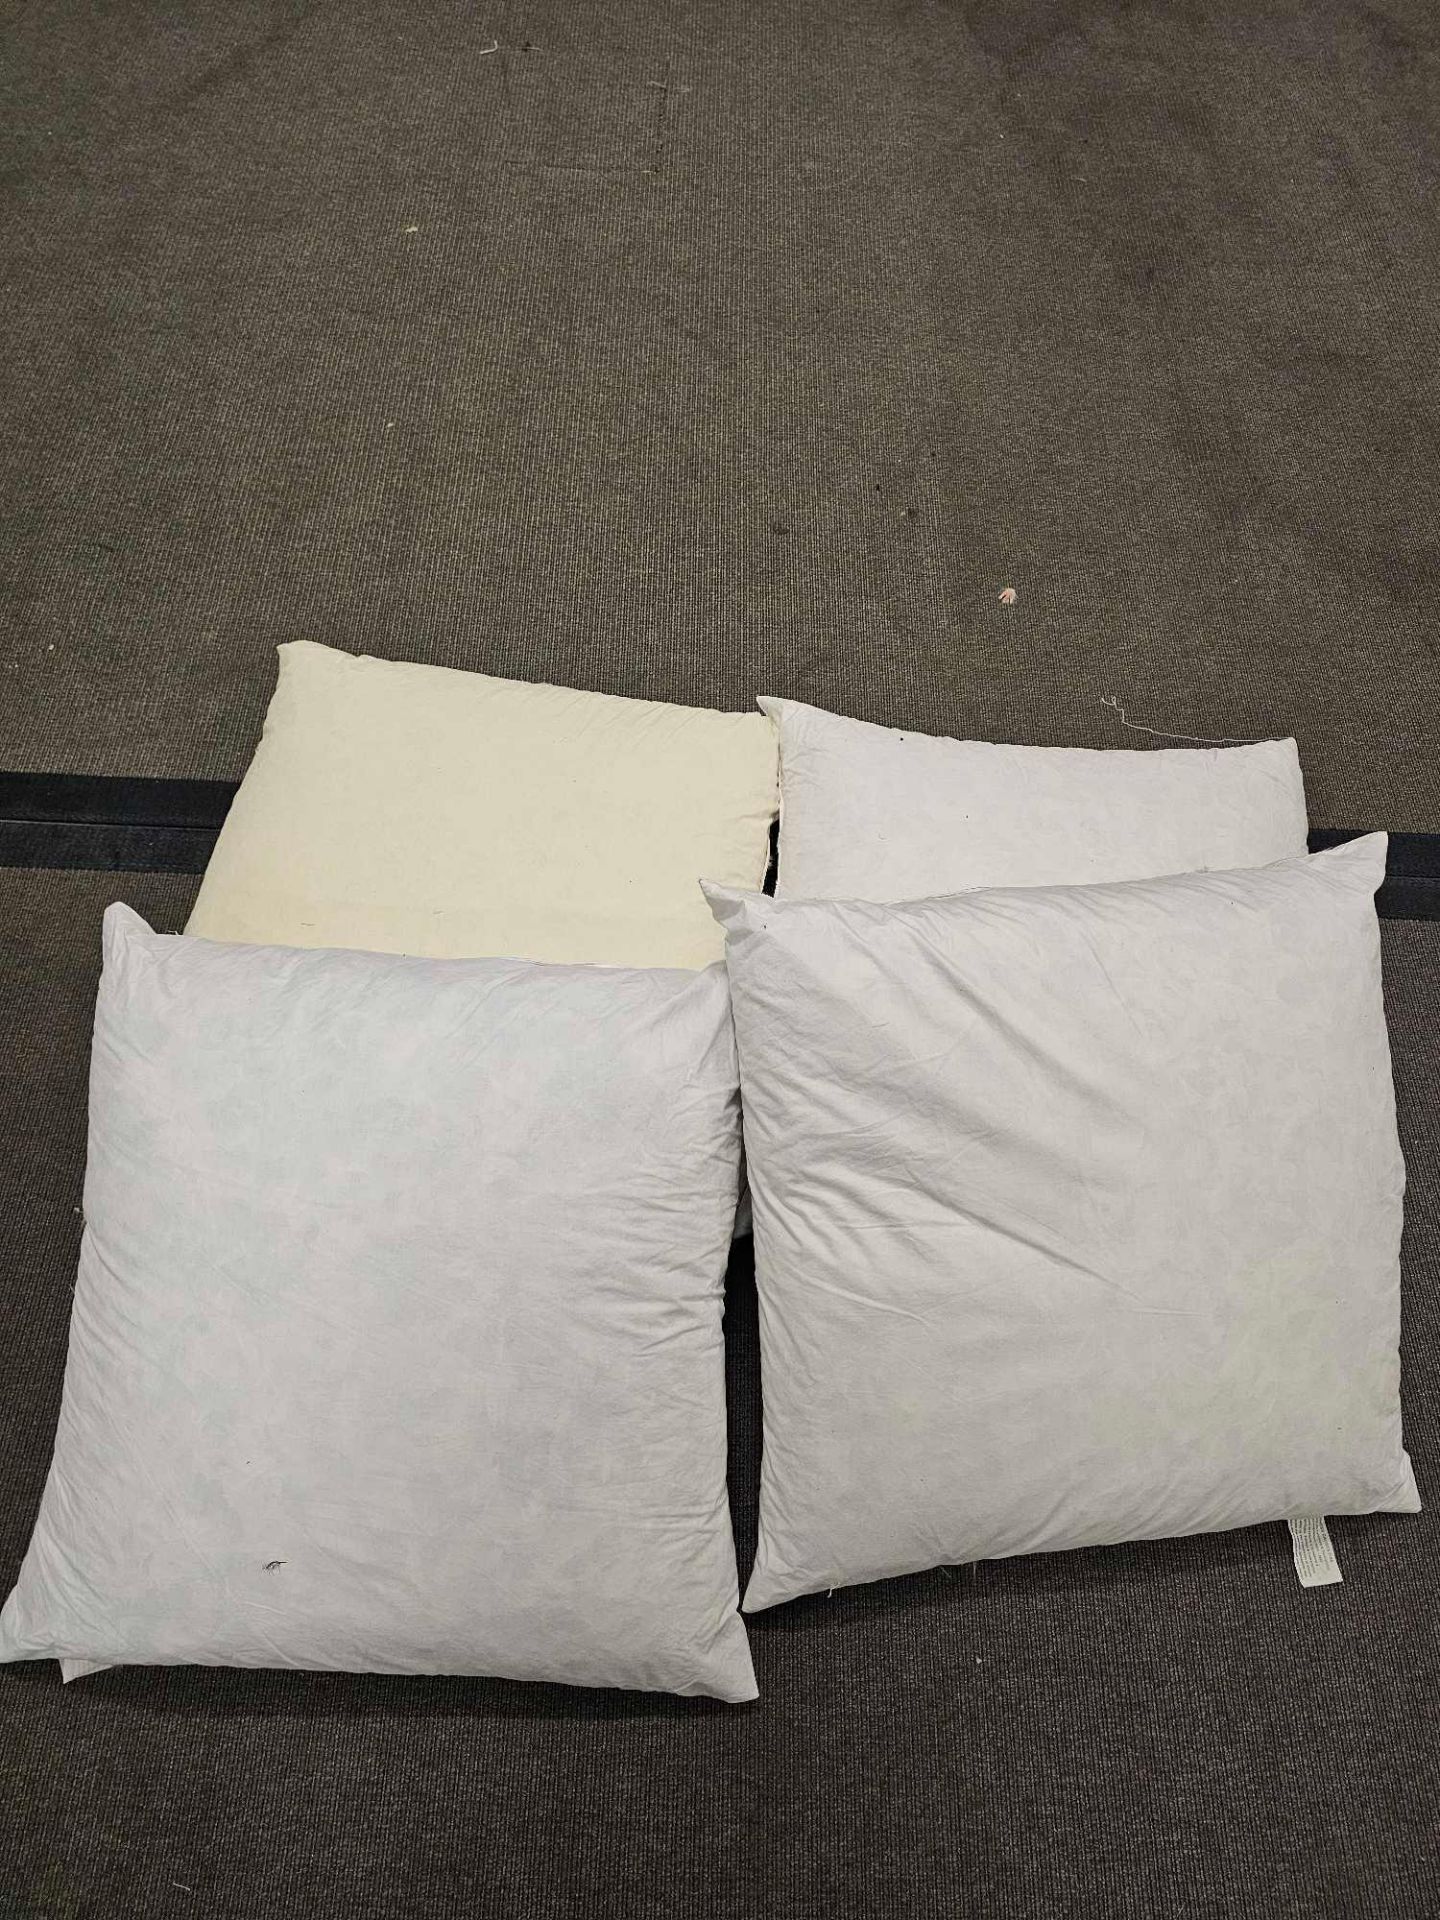 4 x Plane Cushions Pads (No Covers) Size 60 x 60cm ( Ref Cush 148)